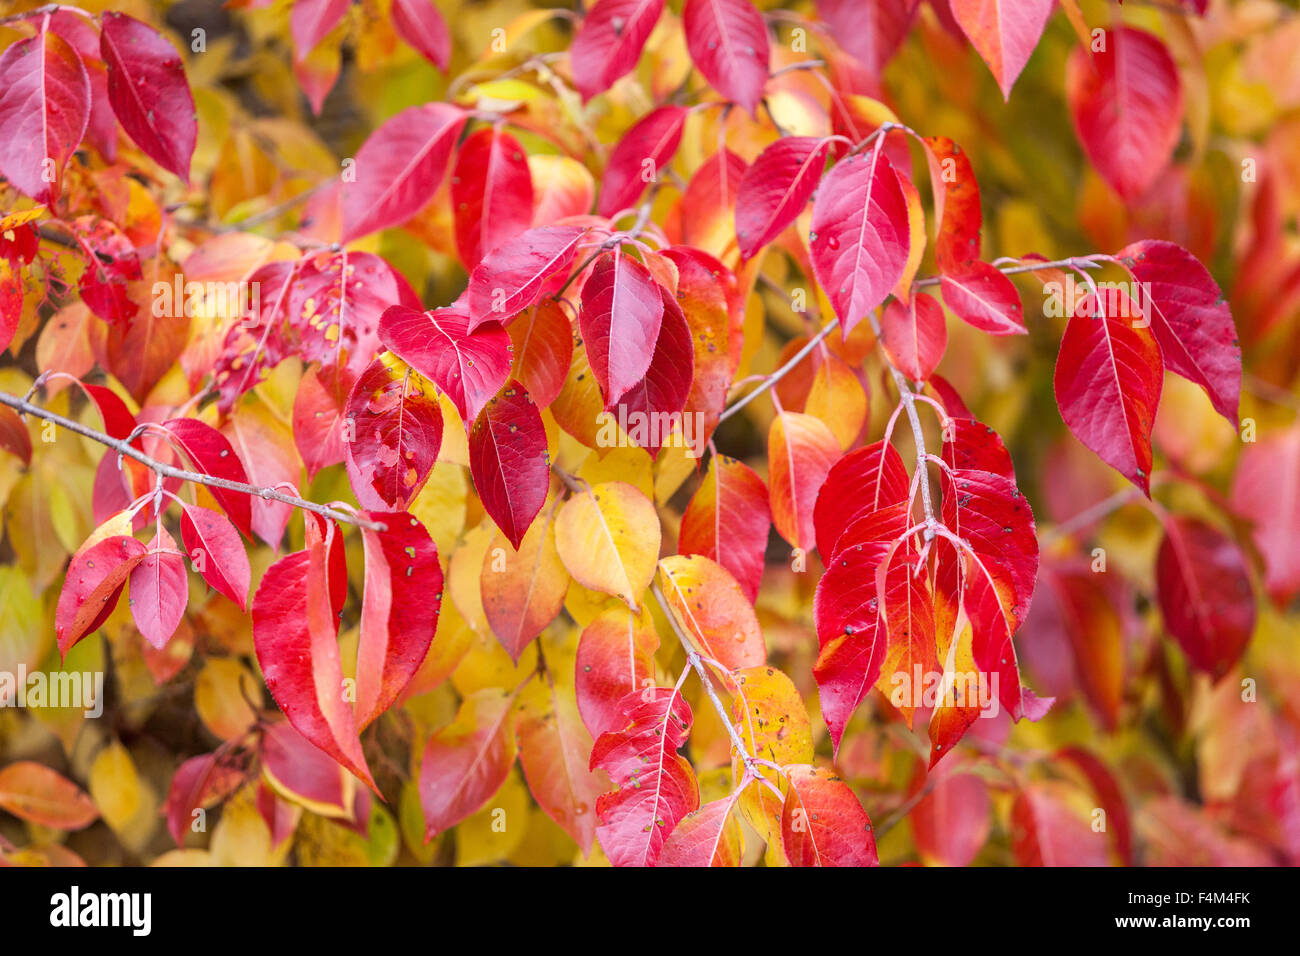 Viburnum prunifolium Attractive foliage becomes reddish-purple in fall Autumn leaves background Stock Photo